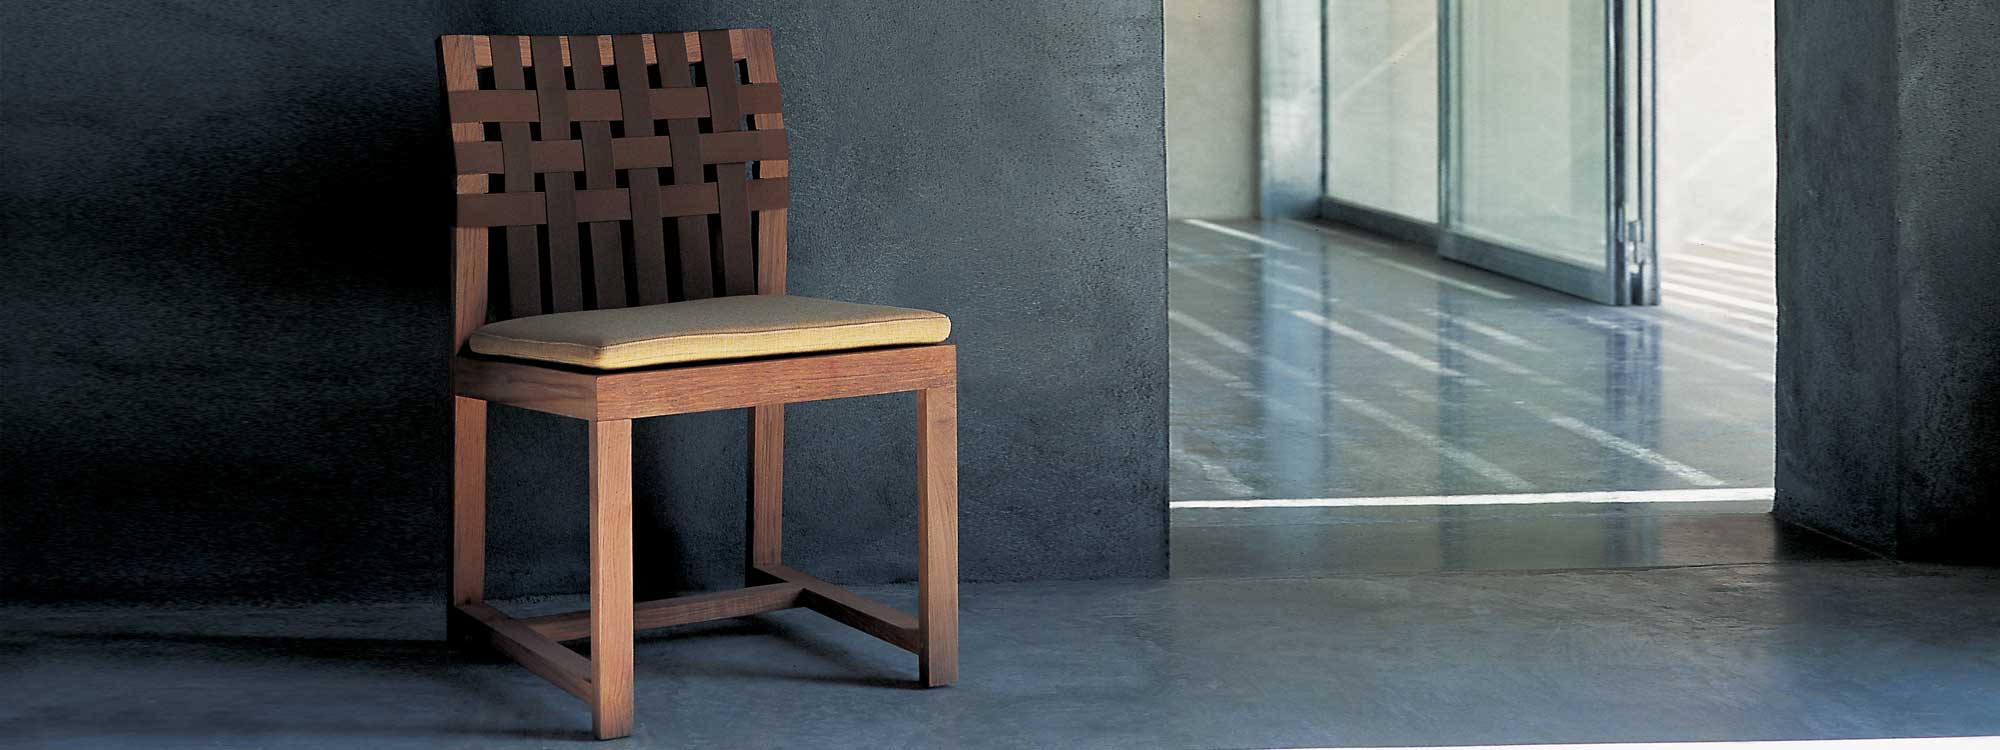 Image of RODA Network teak chair by Rodolfo Dordoni on polished concrete floor.